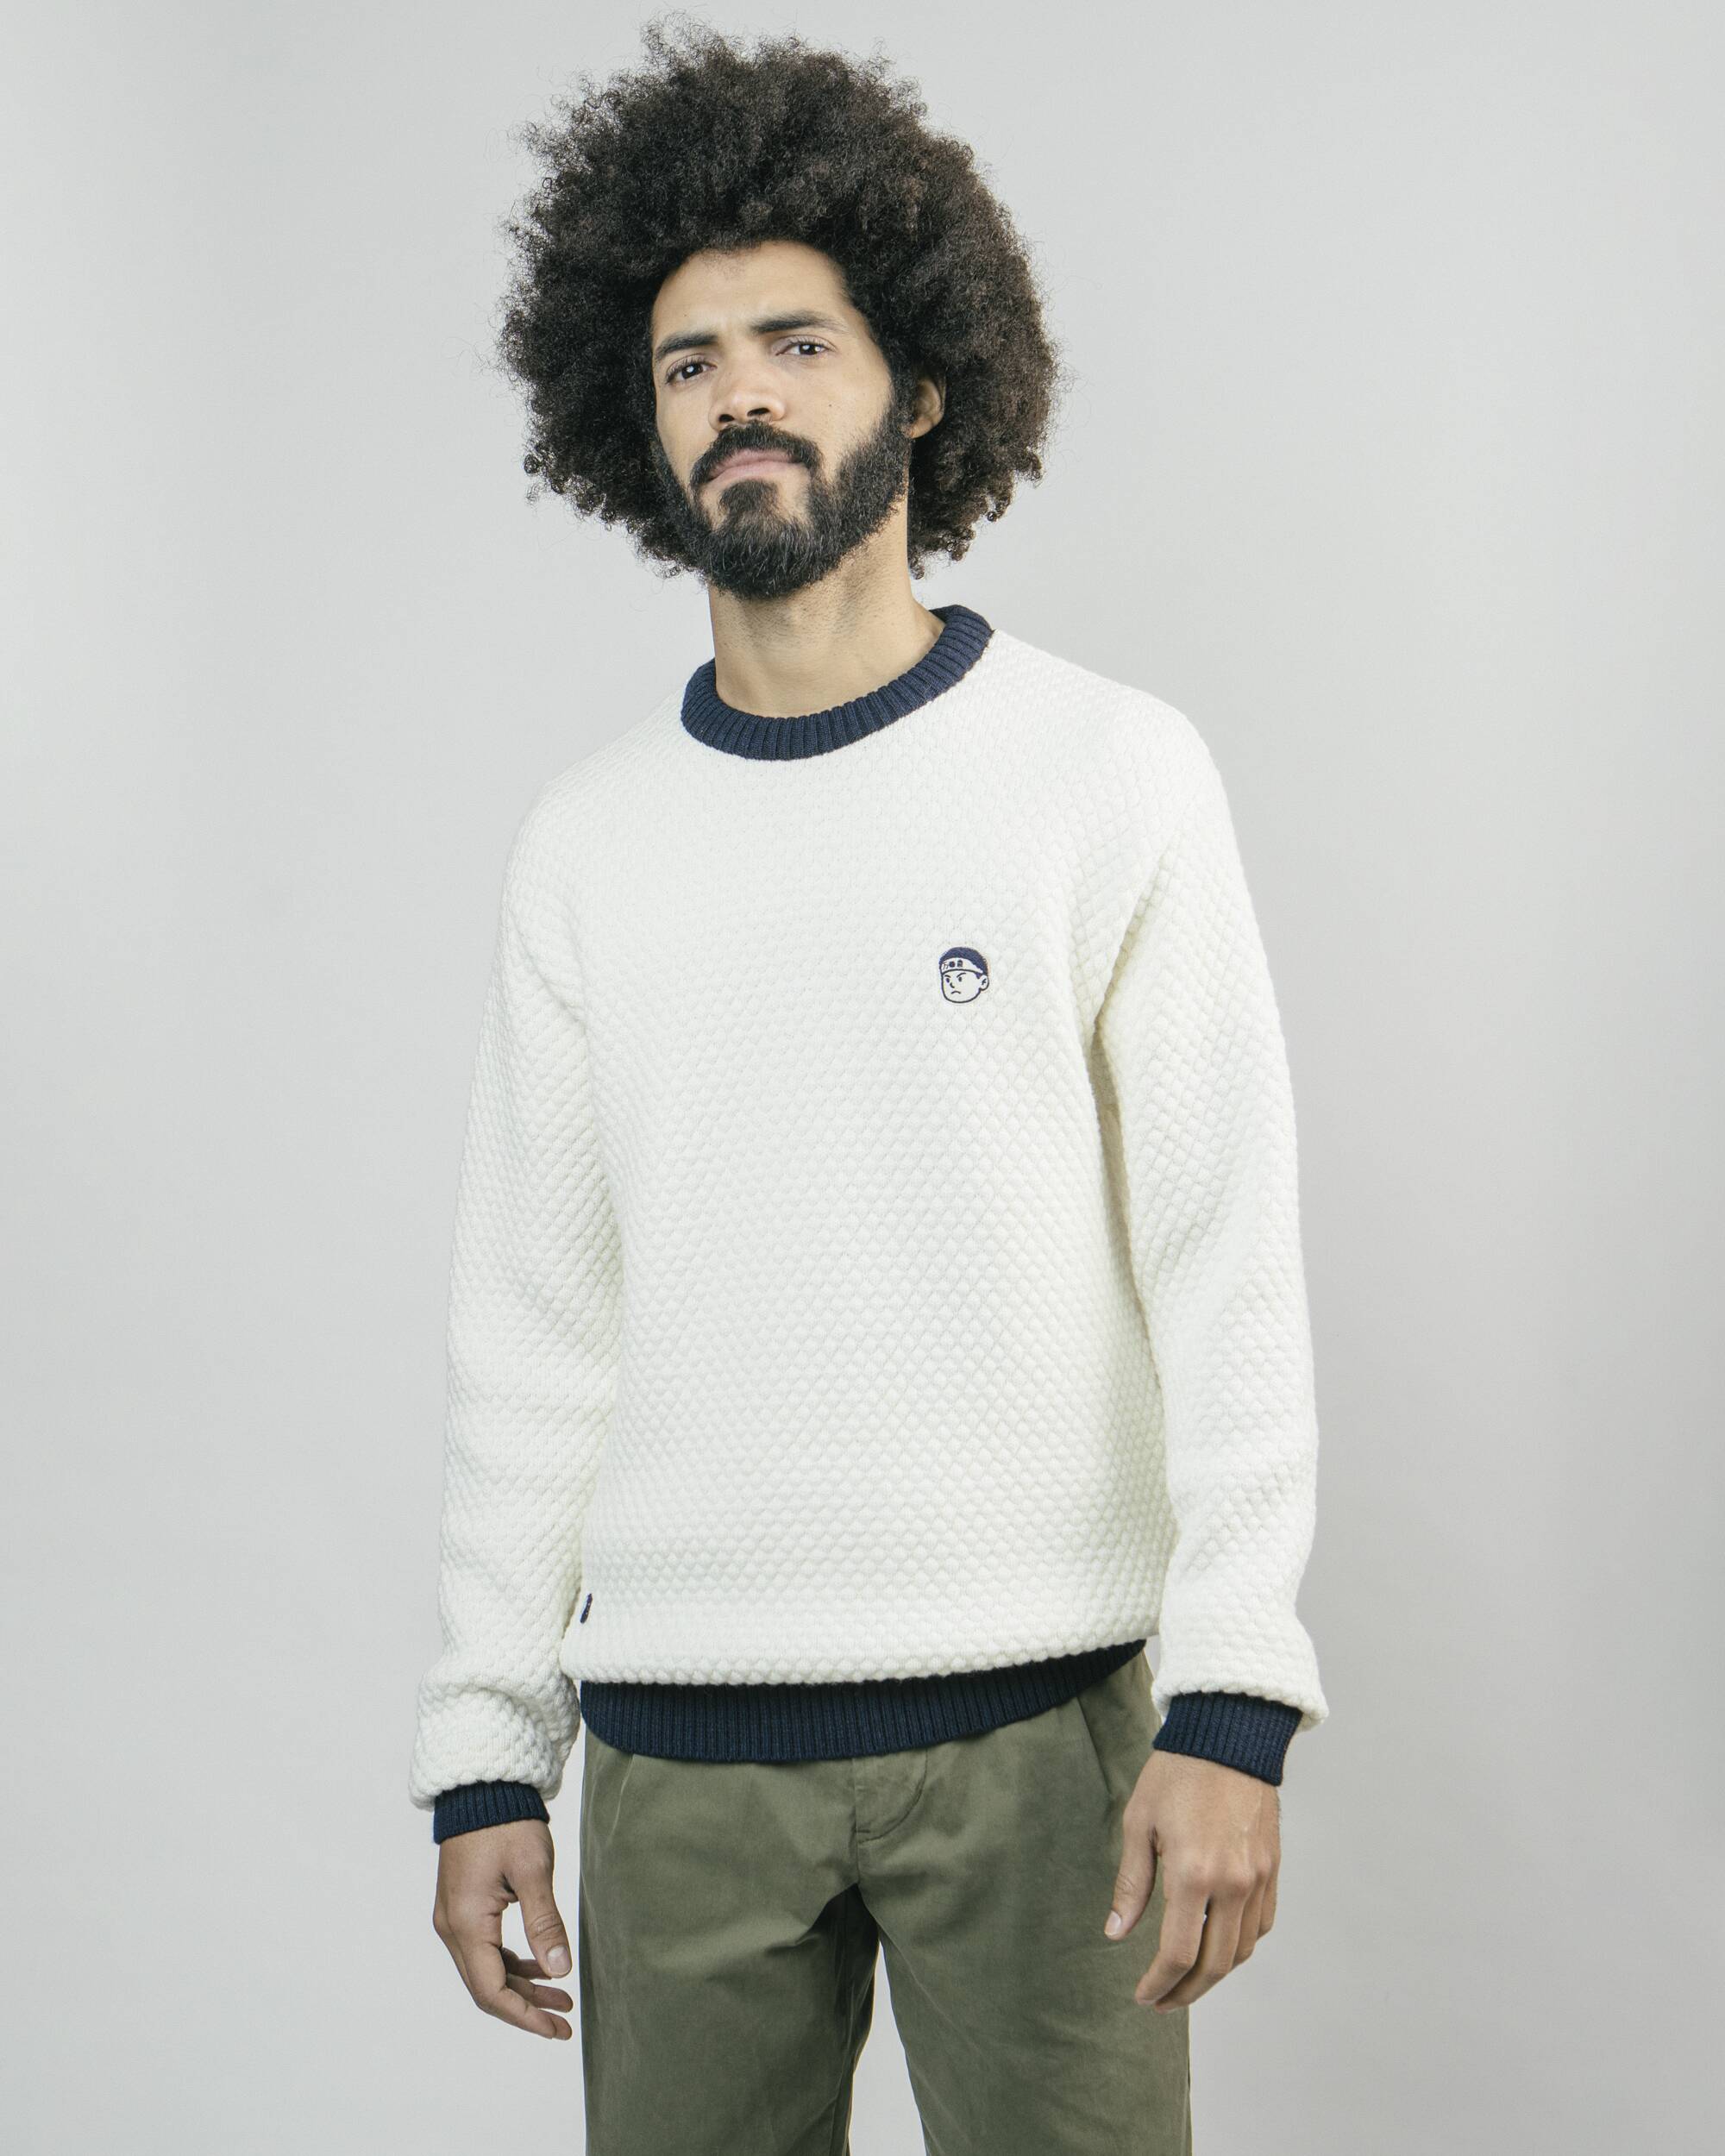 Sweater "Akito" in offwhite / beige made from 100% merino wool from Brava Fabrics